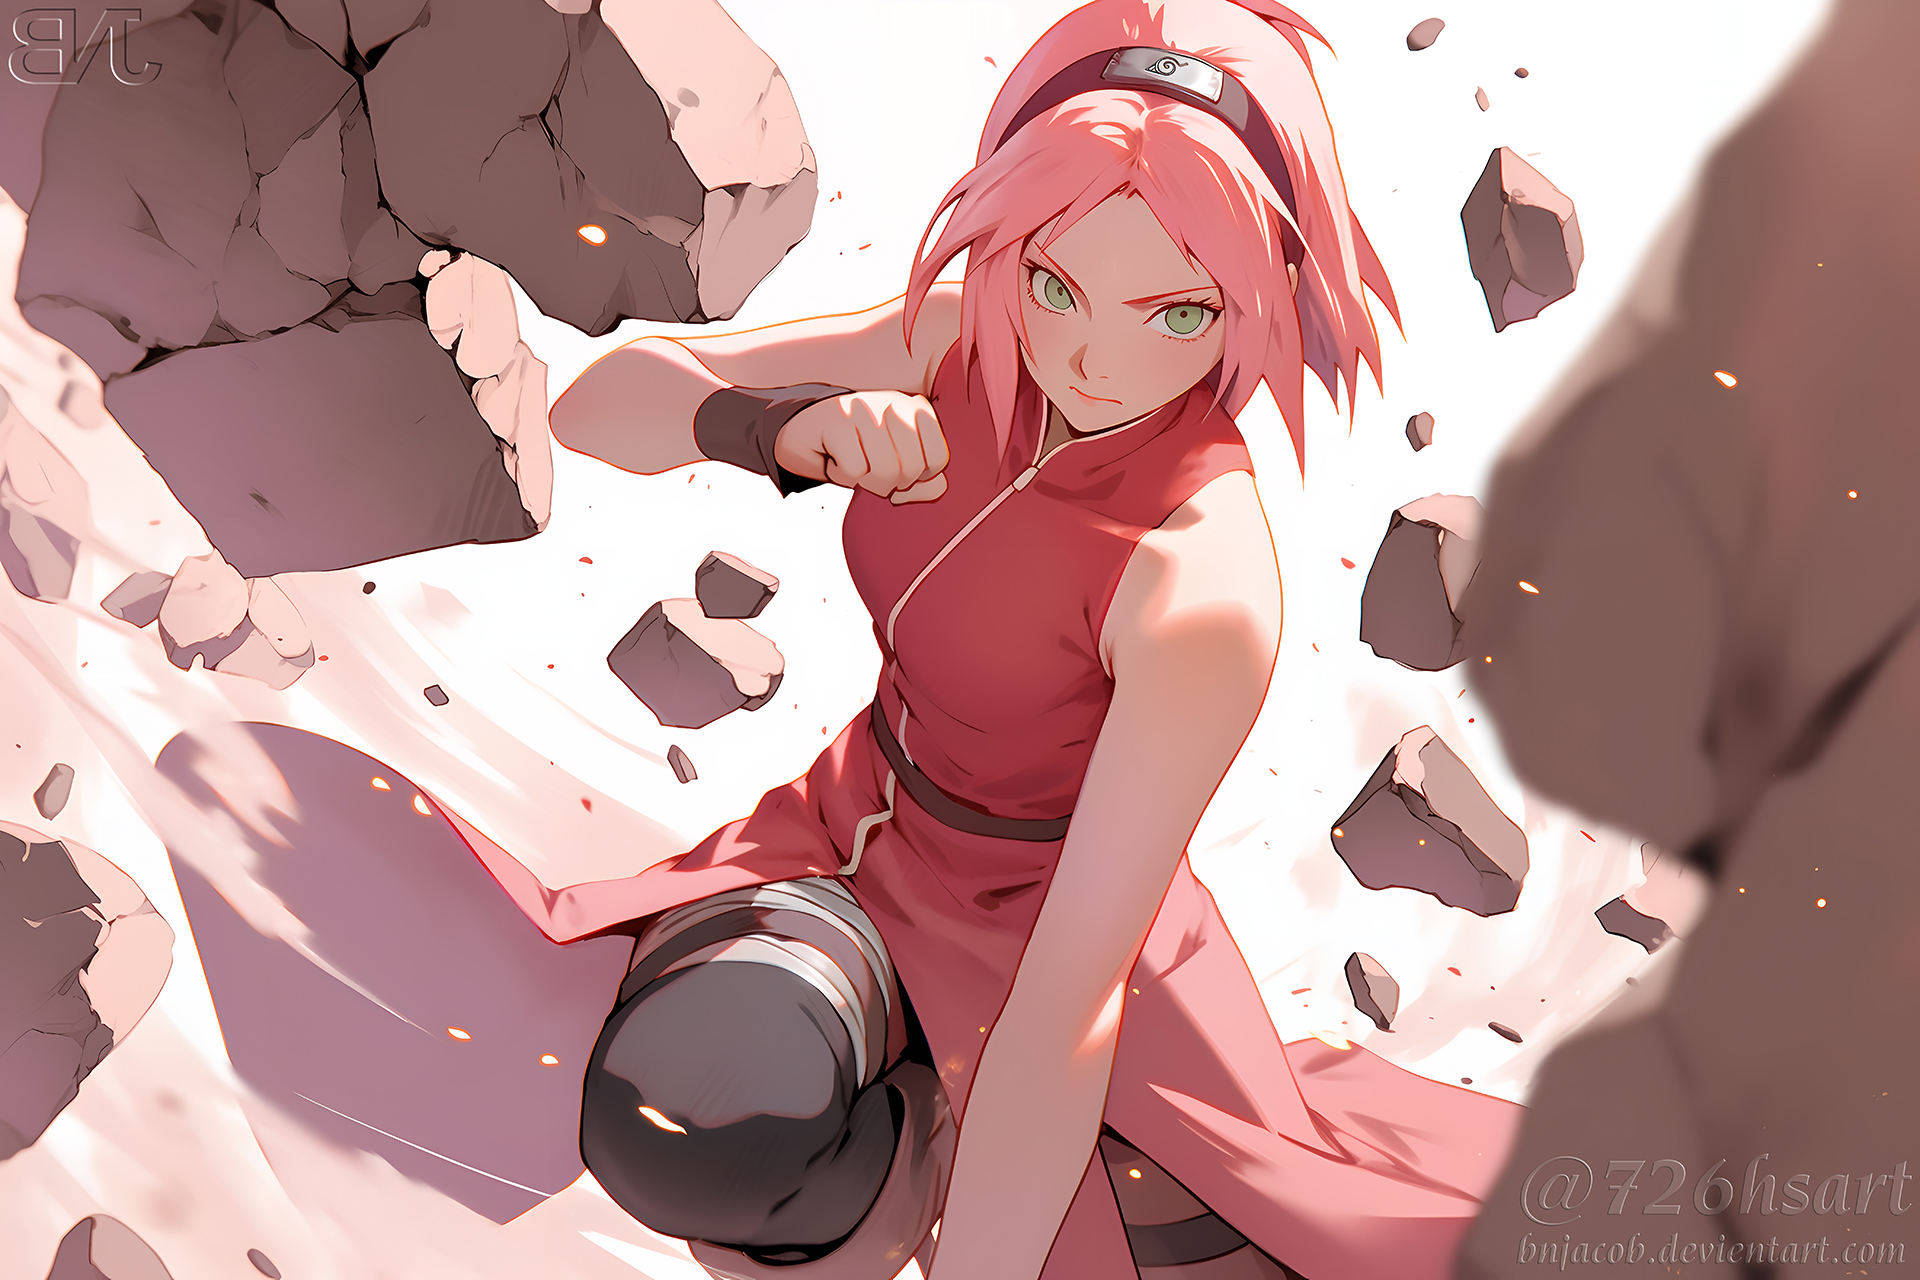 Fan art) Naruto - Haruno Sakura 2 by BNJacob on DeviantArt